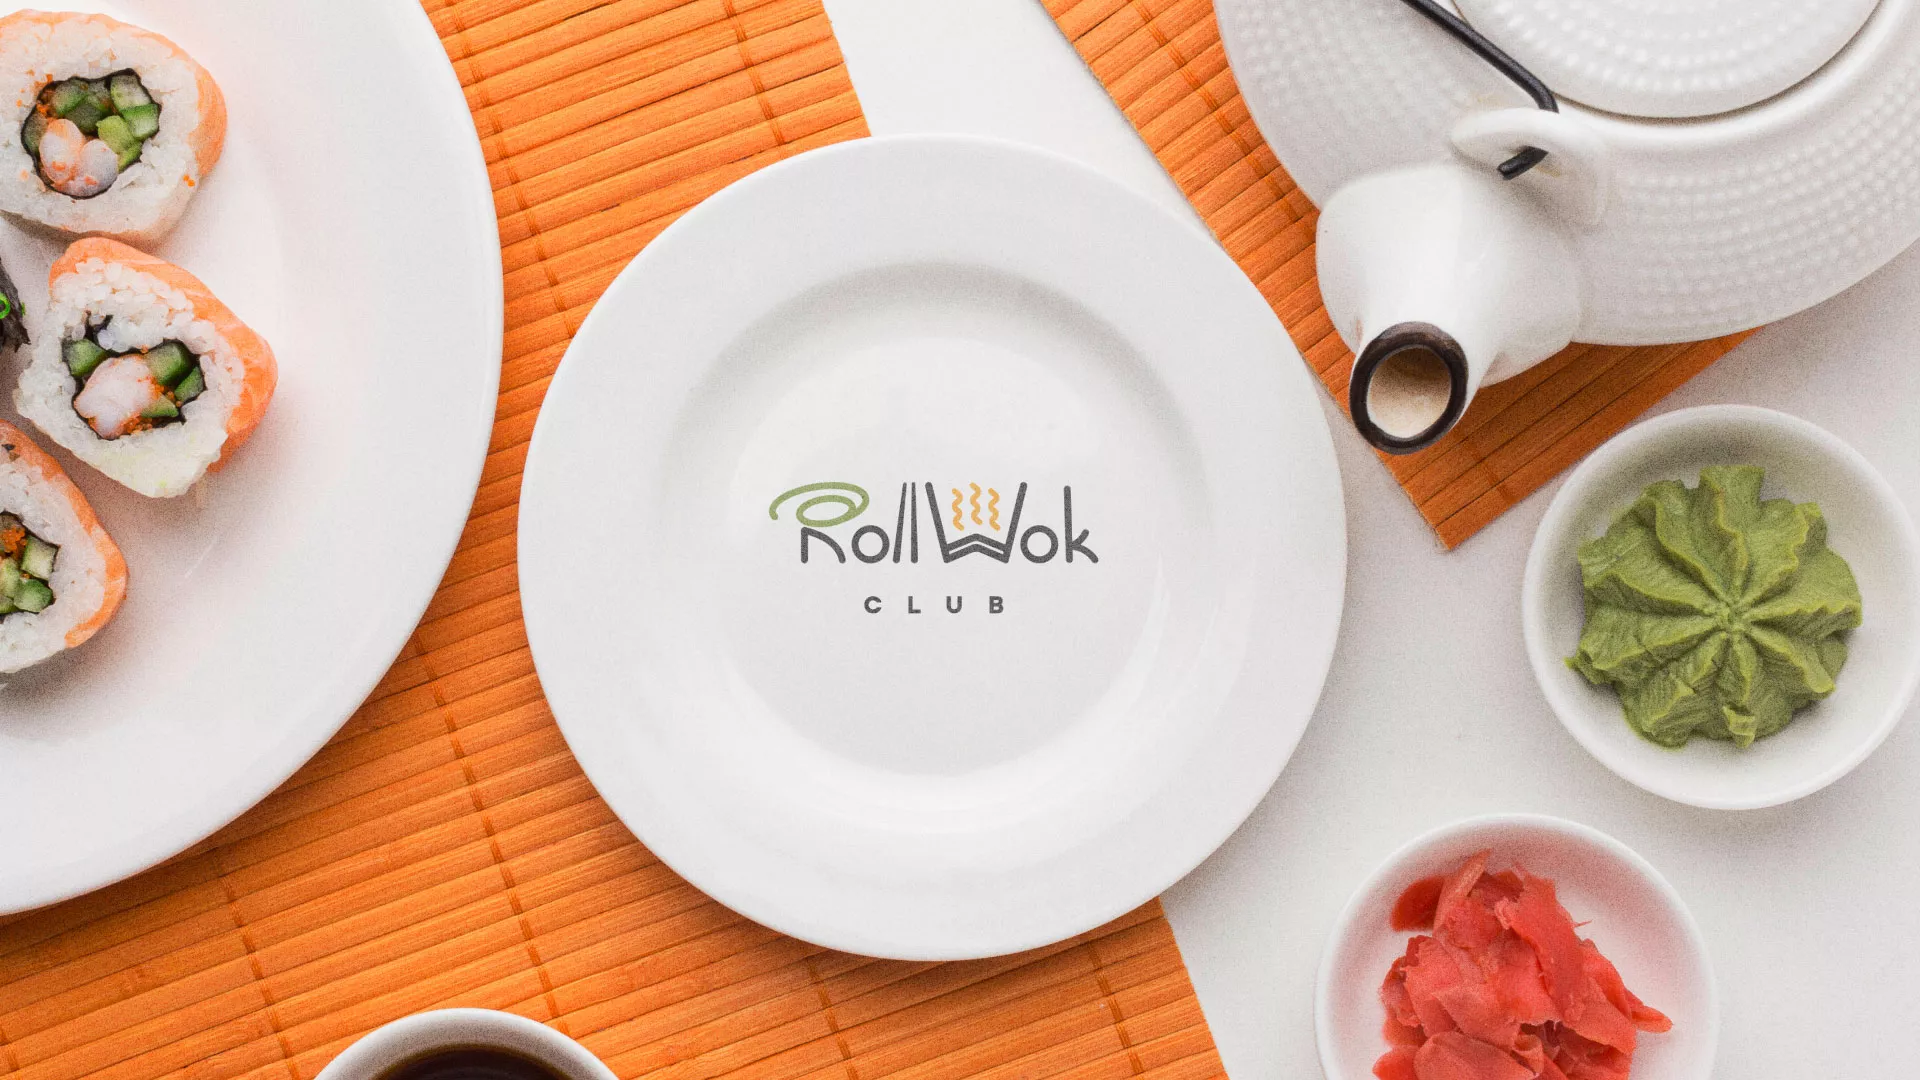 Разработка логотипа и фирменного стиля суши-бара «Roll Wok Club» в Талдоме